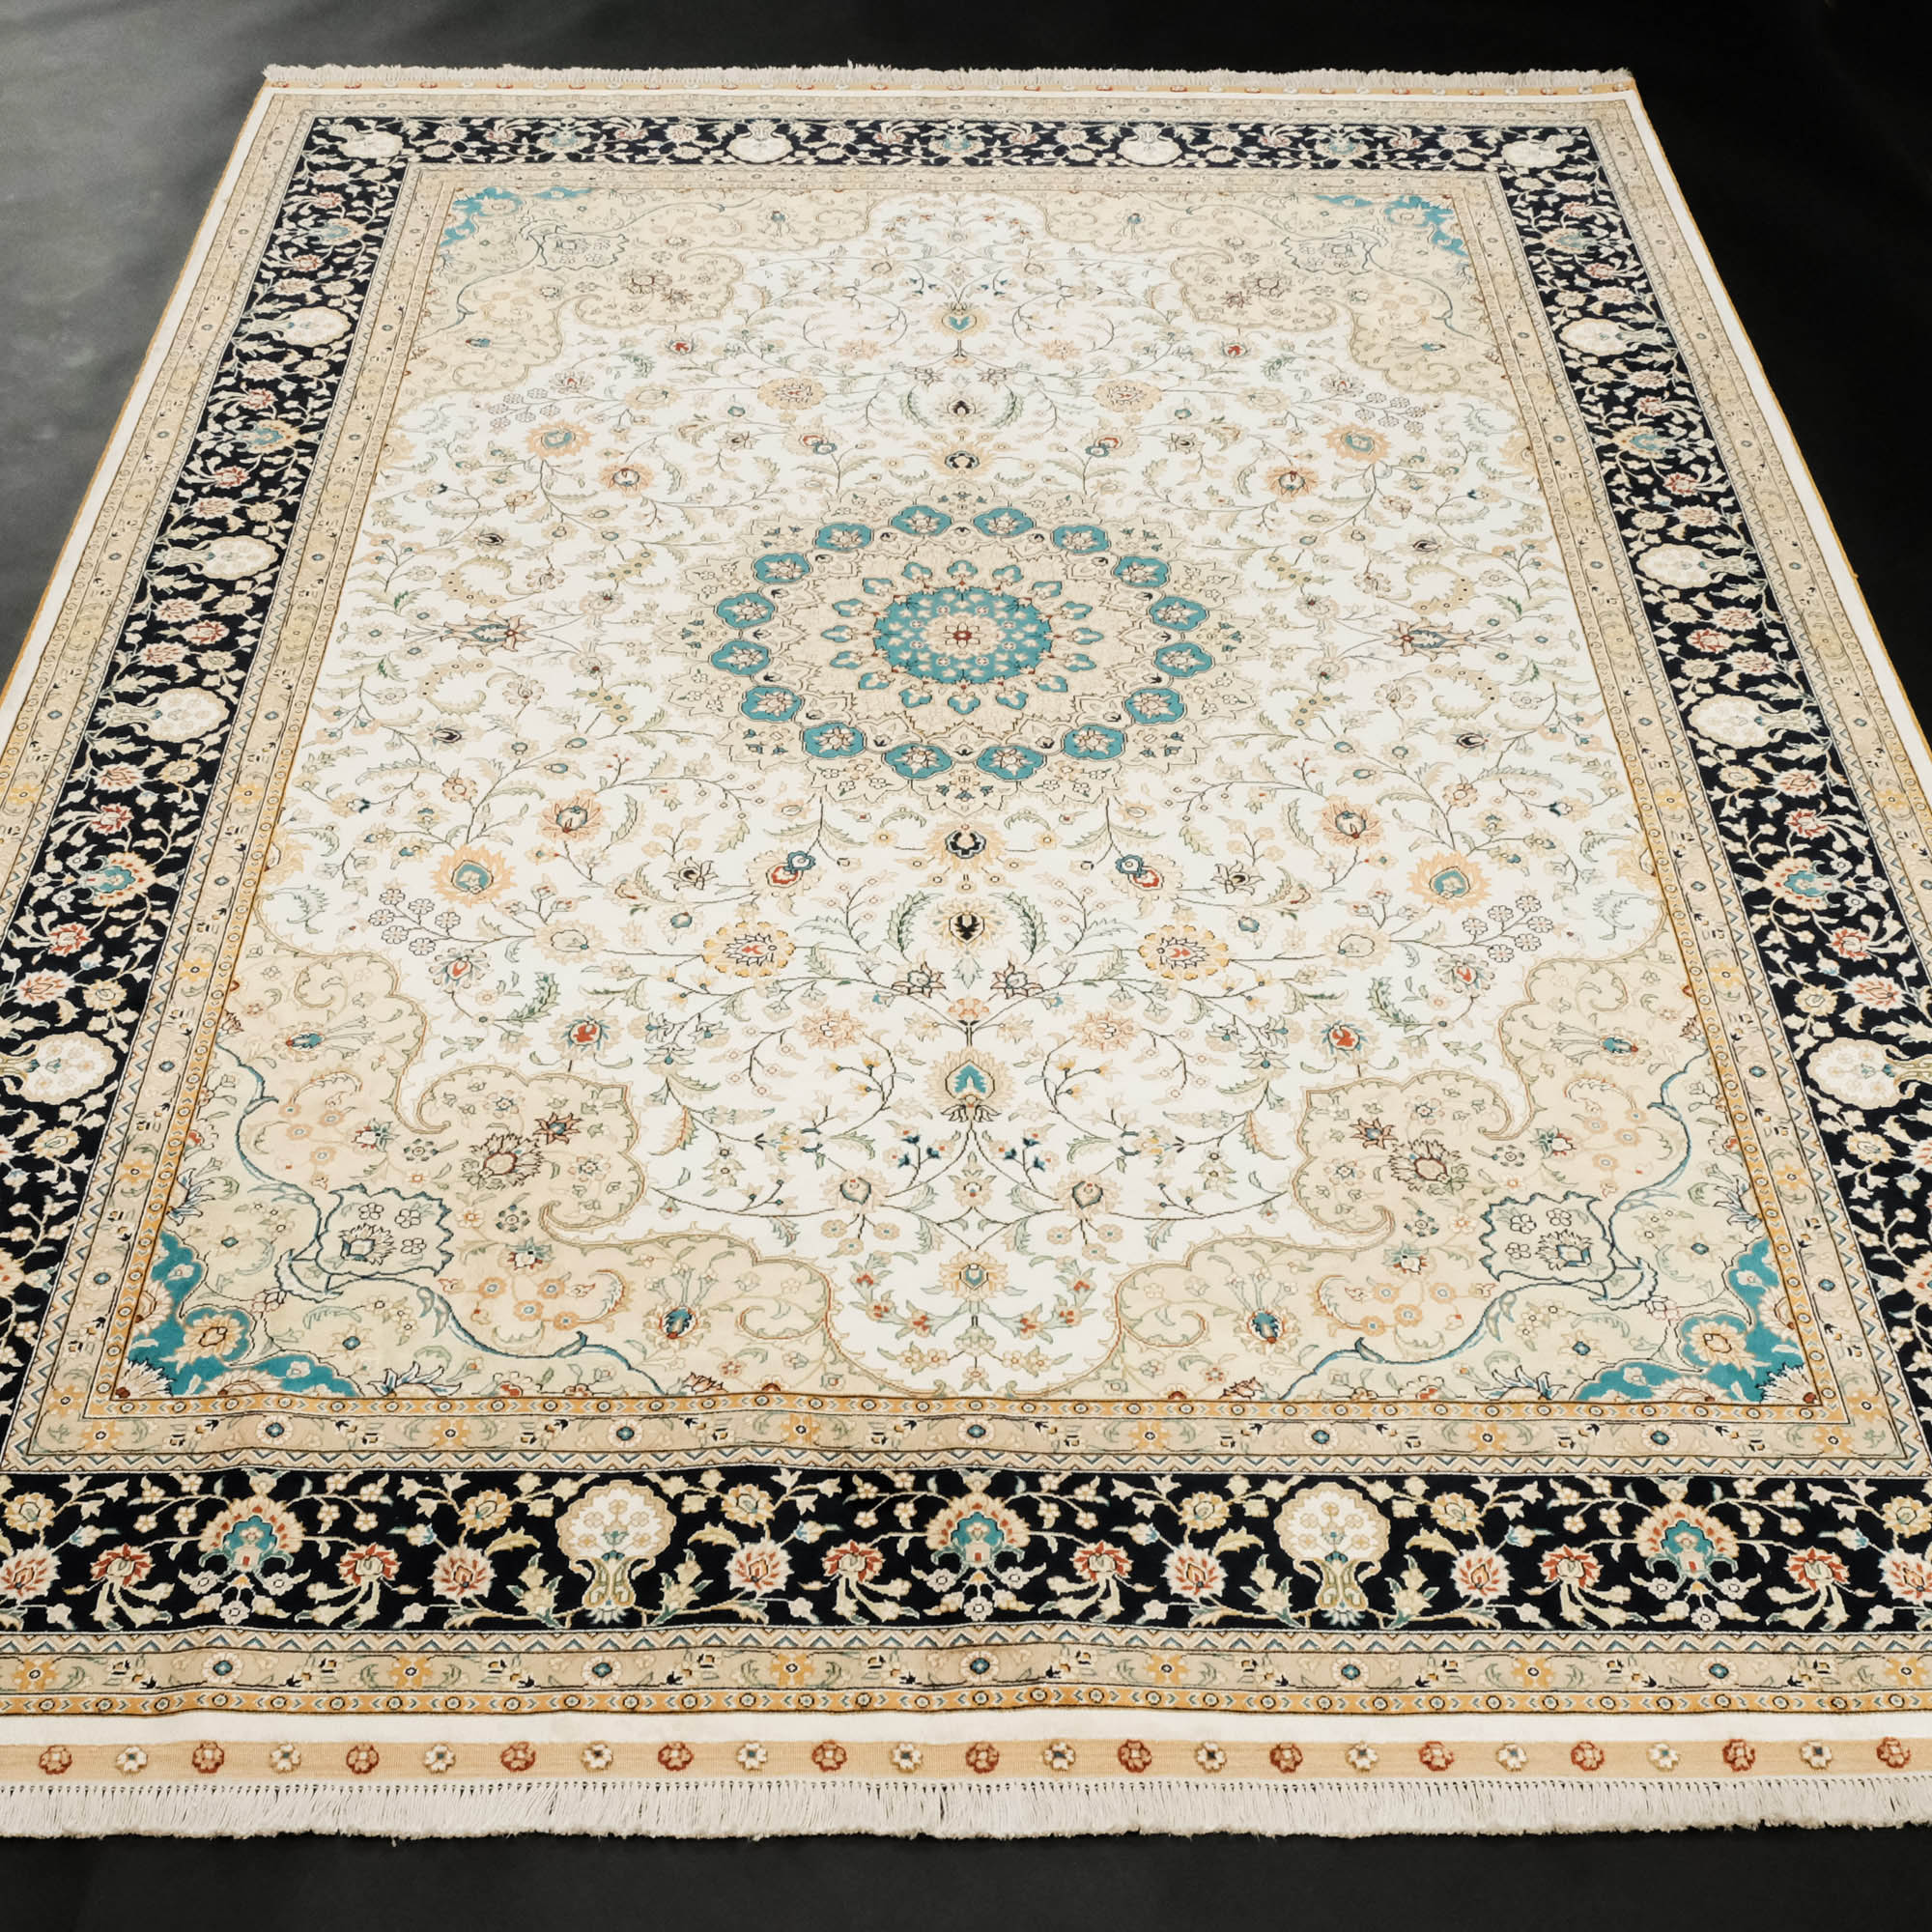 Frame Patterned Hand Woven Cream Cotton Viscose Yarn Carpet